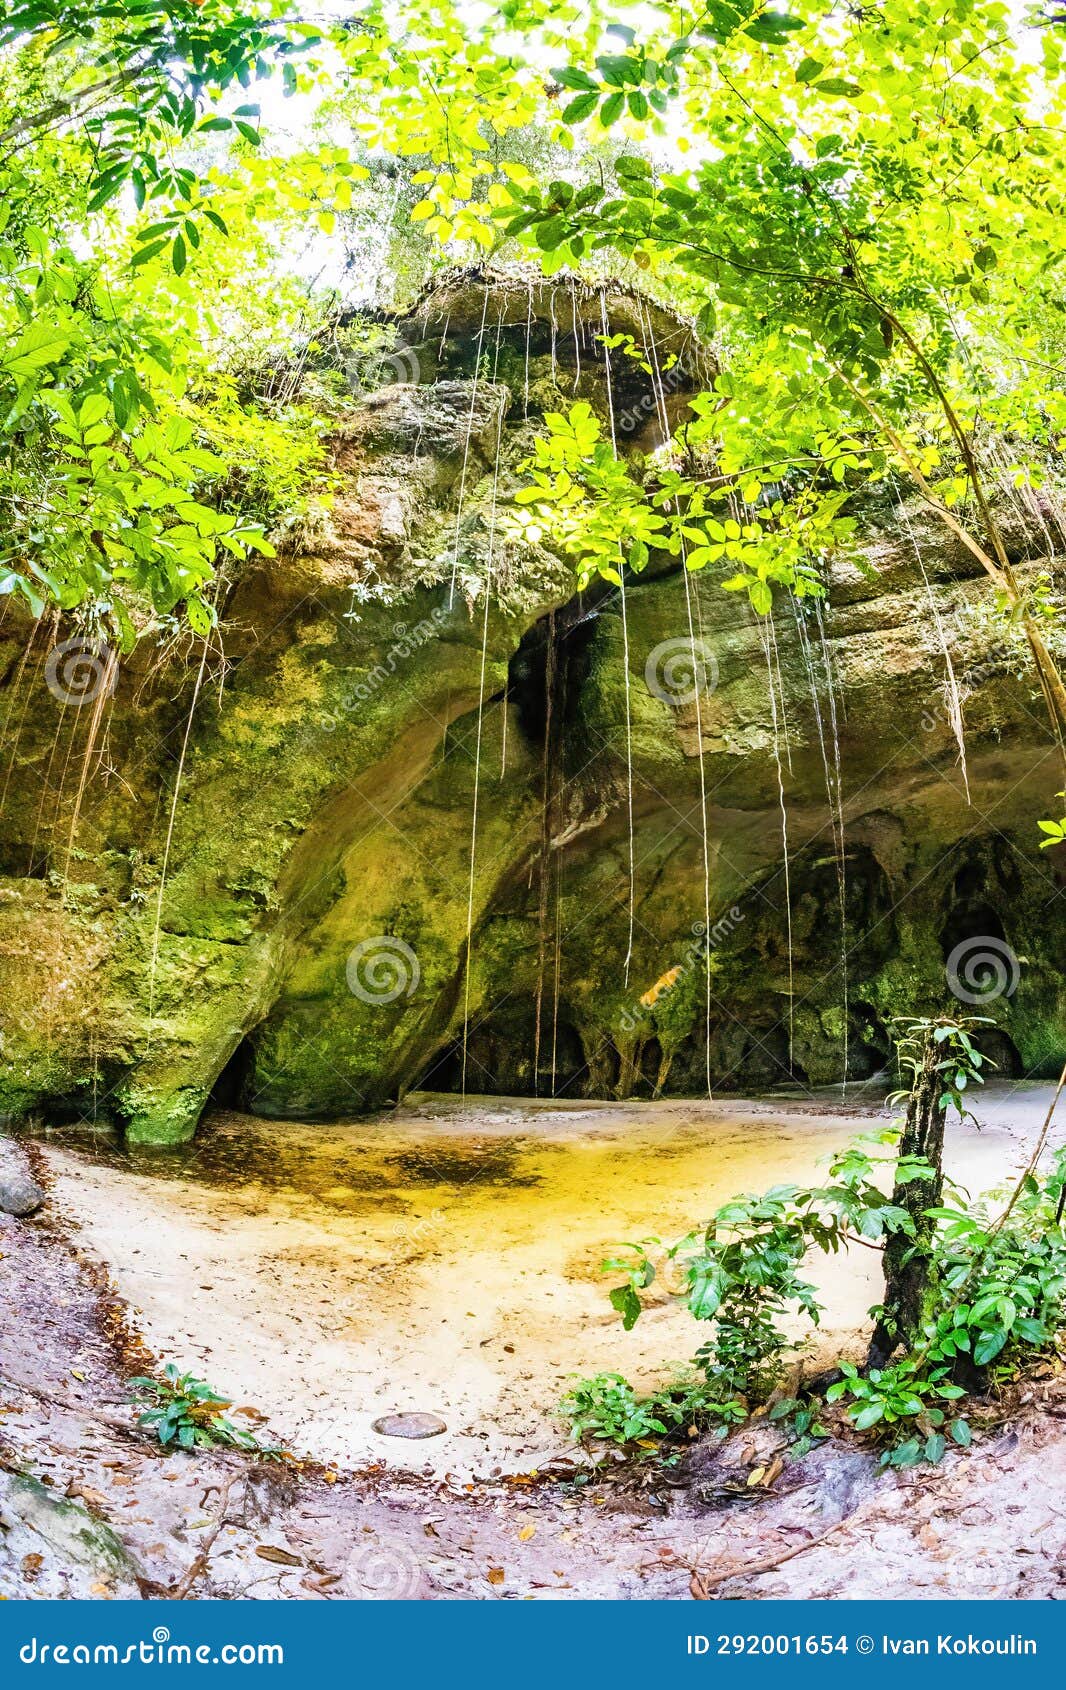 view of judea cave in jungle at presidente figueiredo brazil